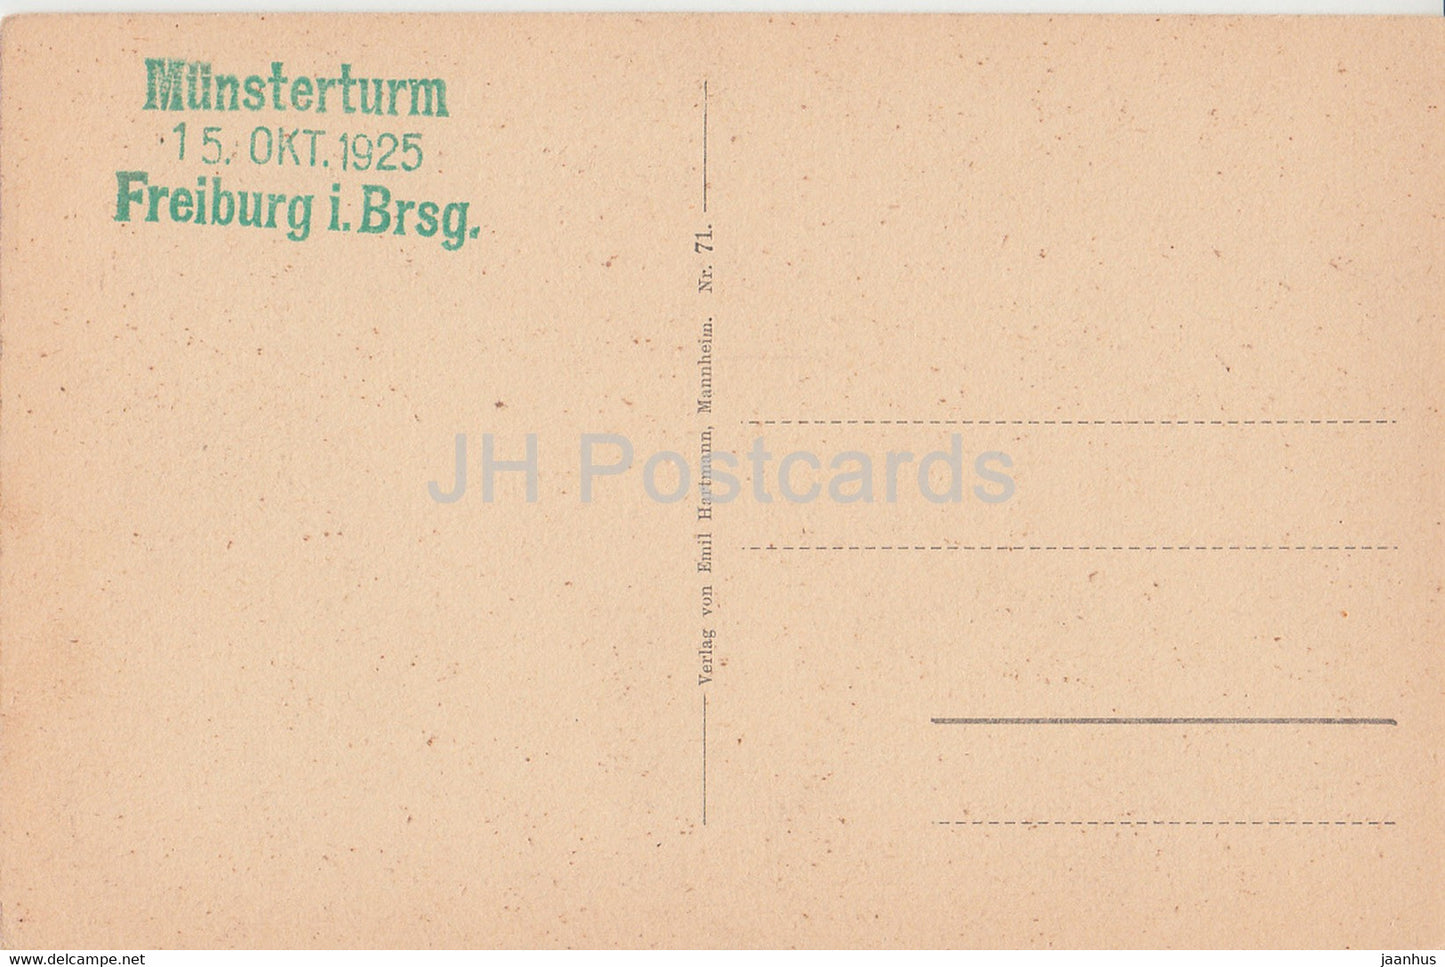 Freiburg i B - Das Munster - cathédrale - 1925 - carte postale ancienne - Allemagne - inutilisée